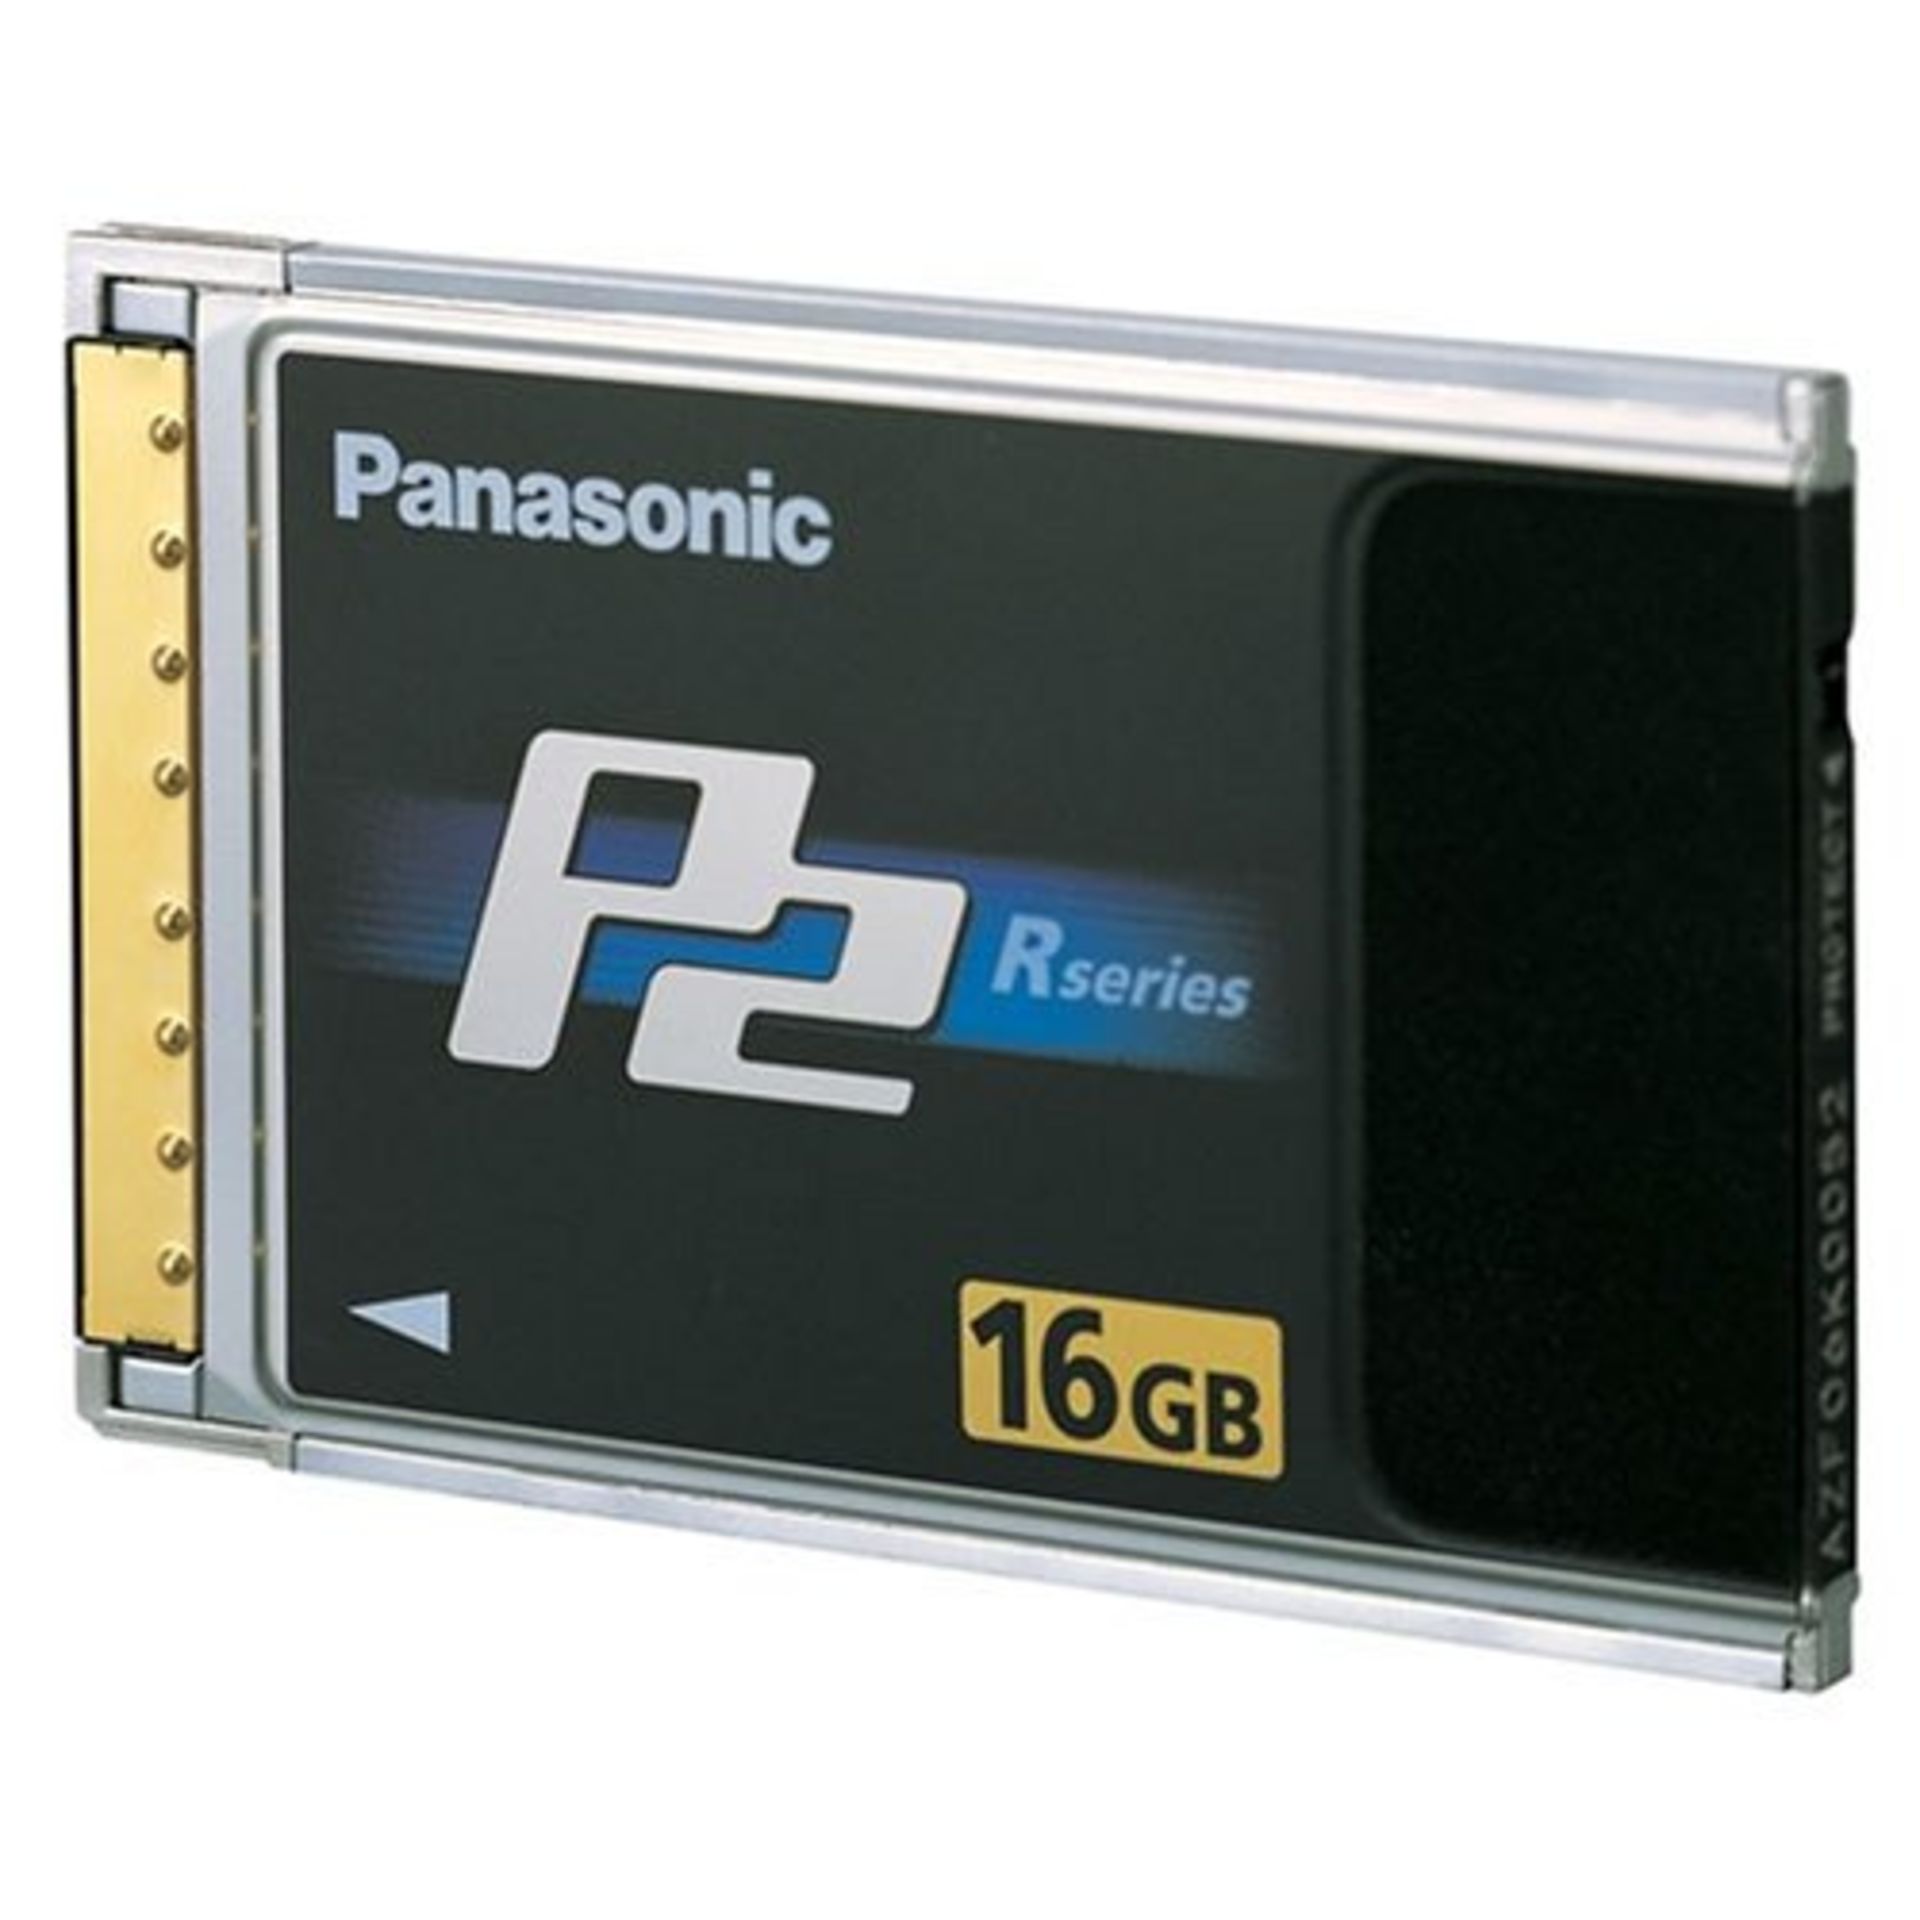 RRP £350.00 Panasonic P2 16GB RSeries card - Image 4 of 12